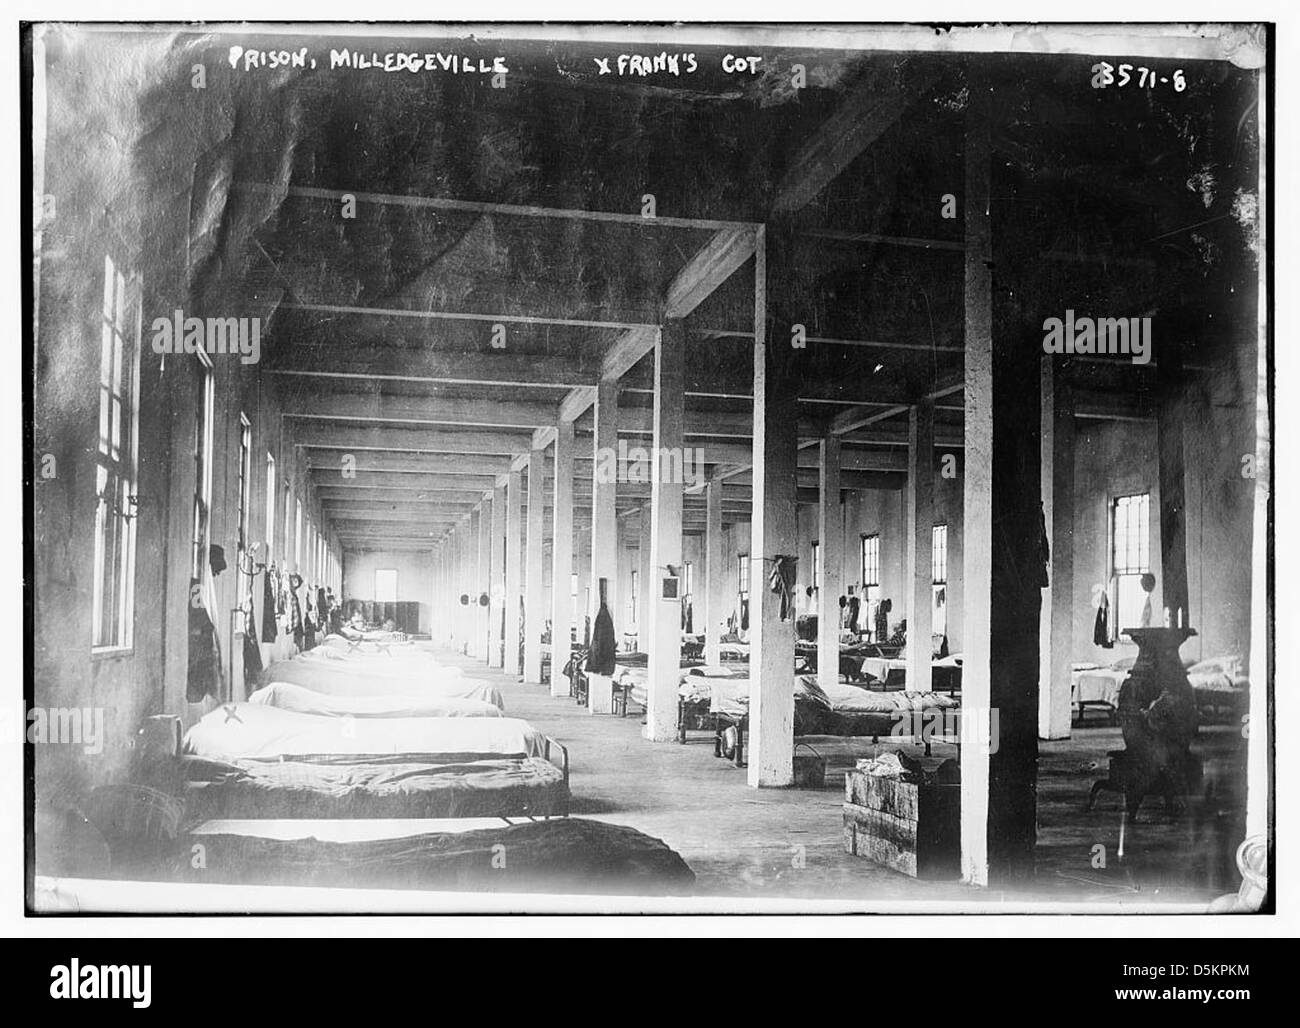 Prison, Milledgeville -- Frank's cot (LOC) Stock Photo